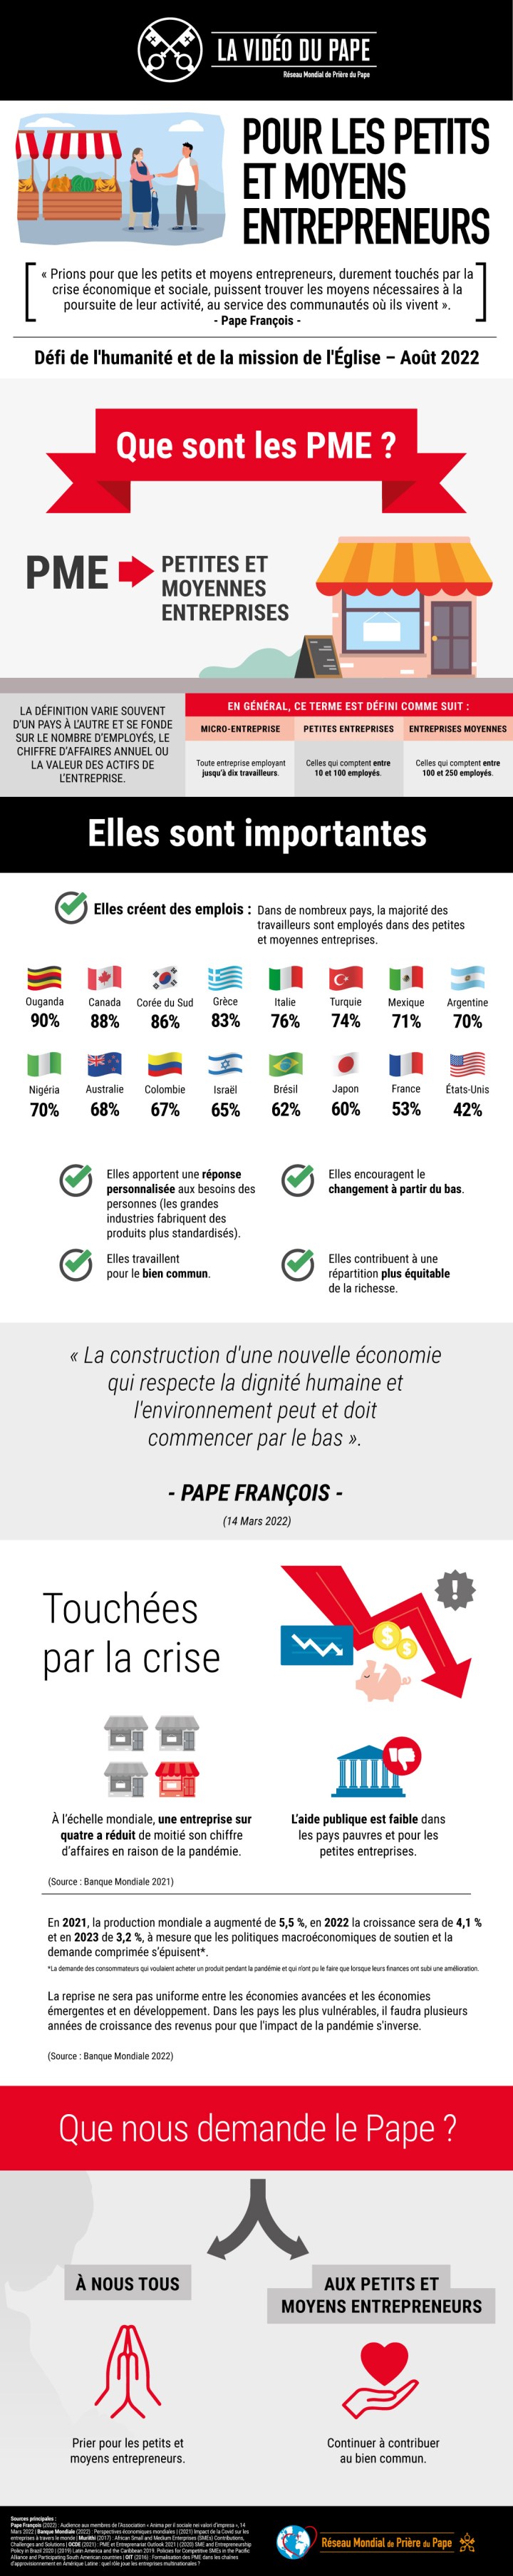 Infographic-TPV-8-2022-FR-Pour-les-petits-et-moyens-entrepreneurs.jpg